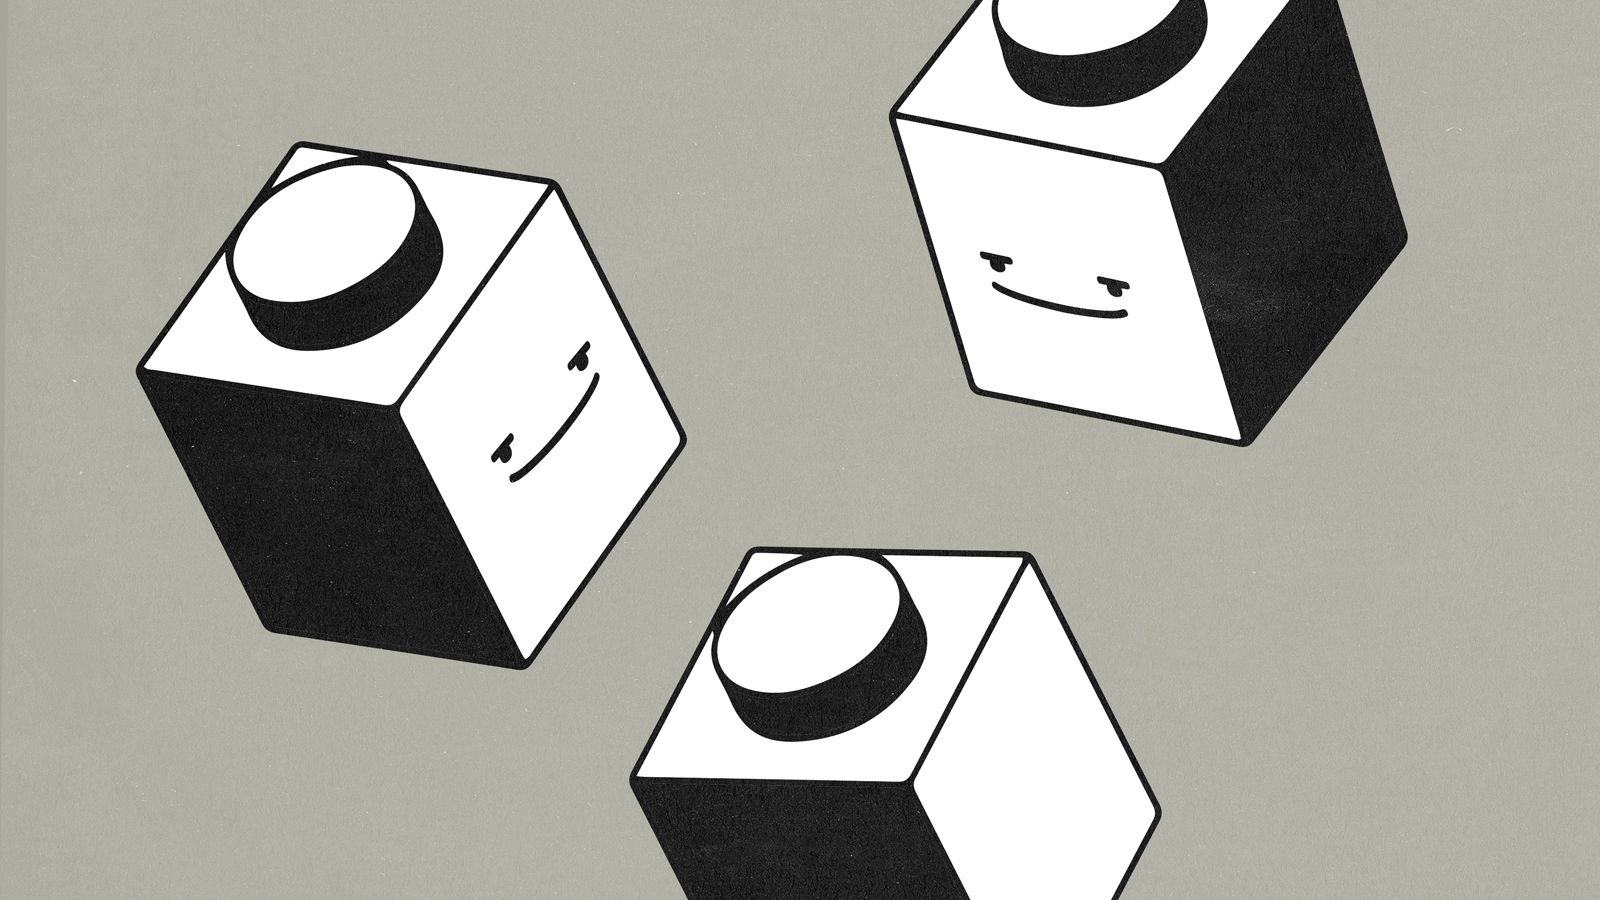 visual illustration of tlon's operating principles, smiling blocks